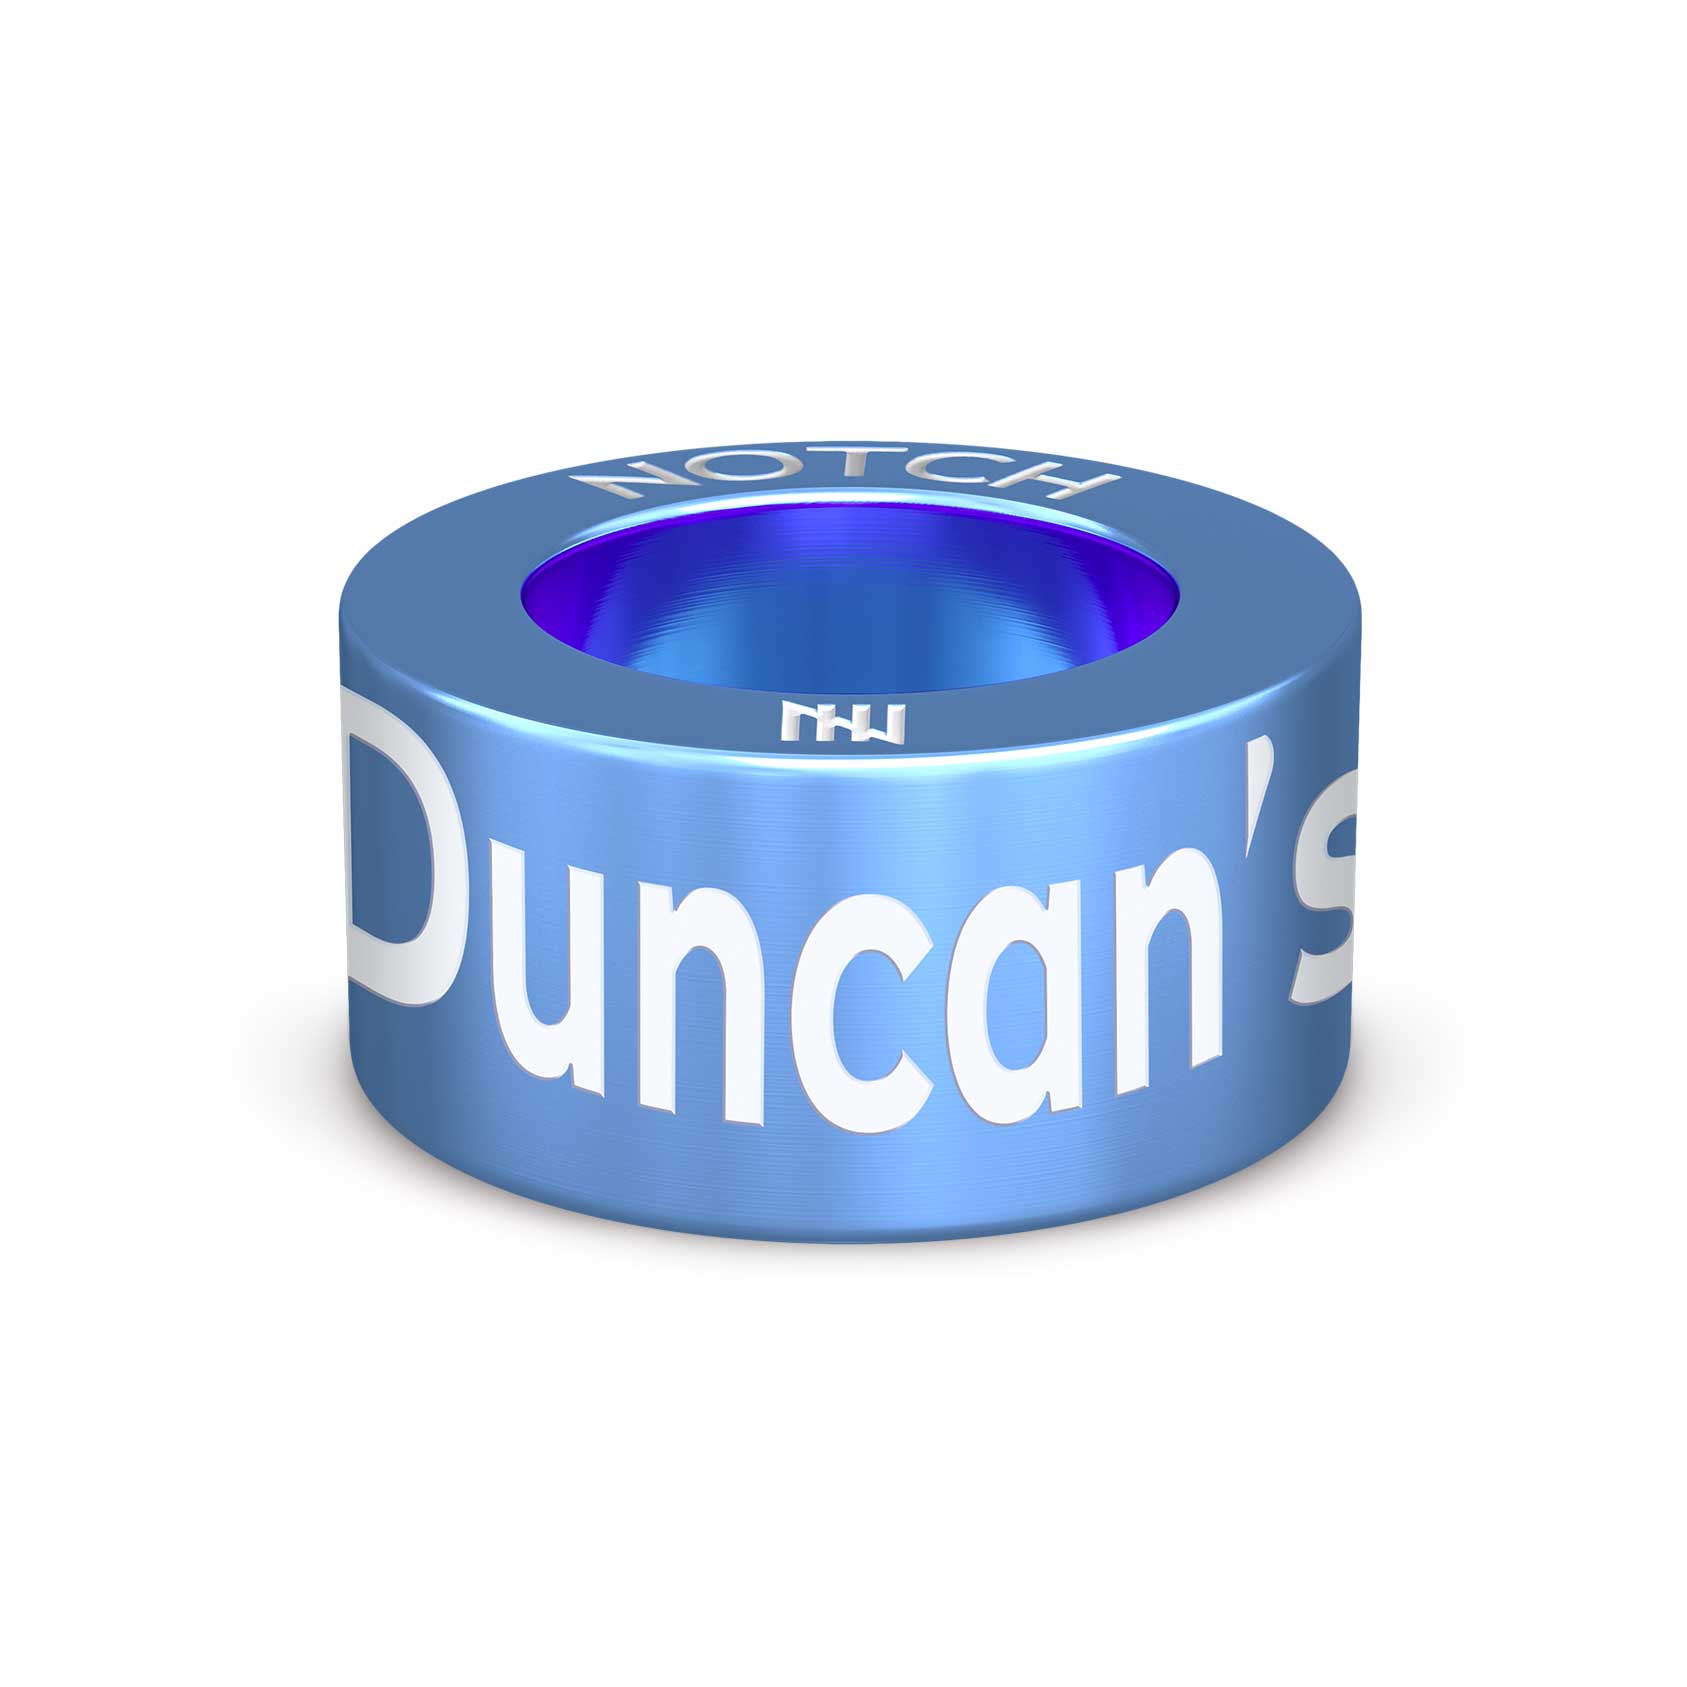 Duncan's Drop by Cobbs